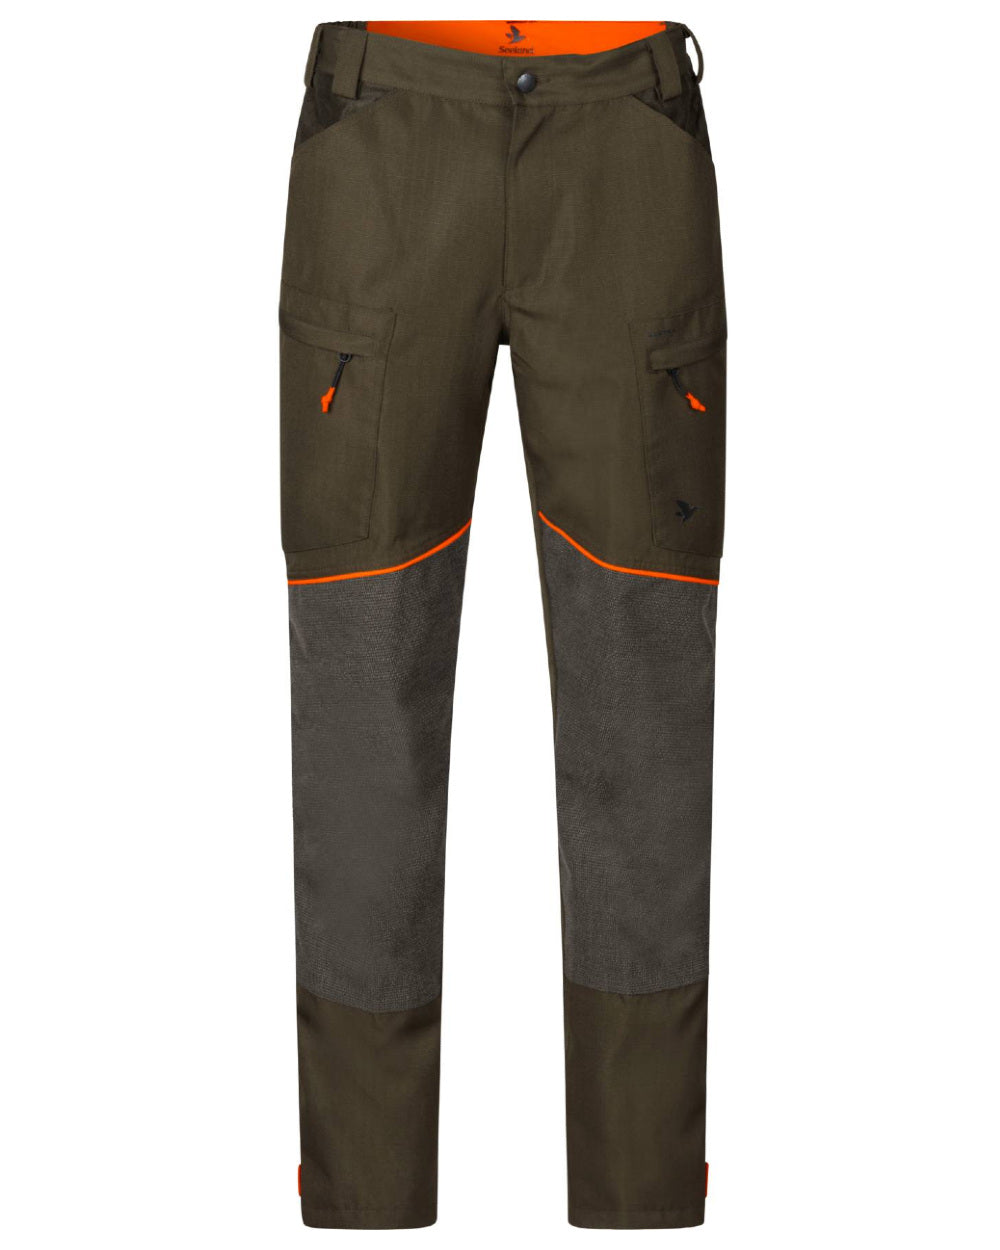 Pine Green/Hi-Vis Orange Coloured Seeland Venture Trousers On A White Background